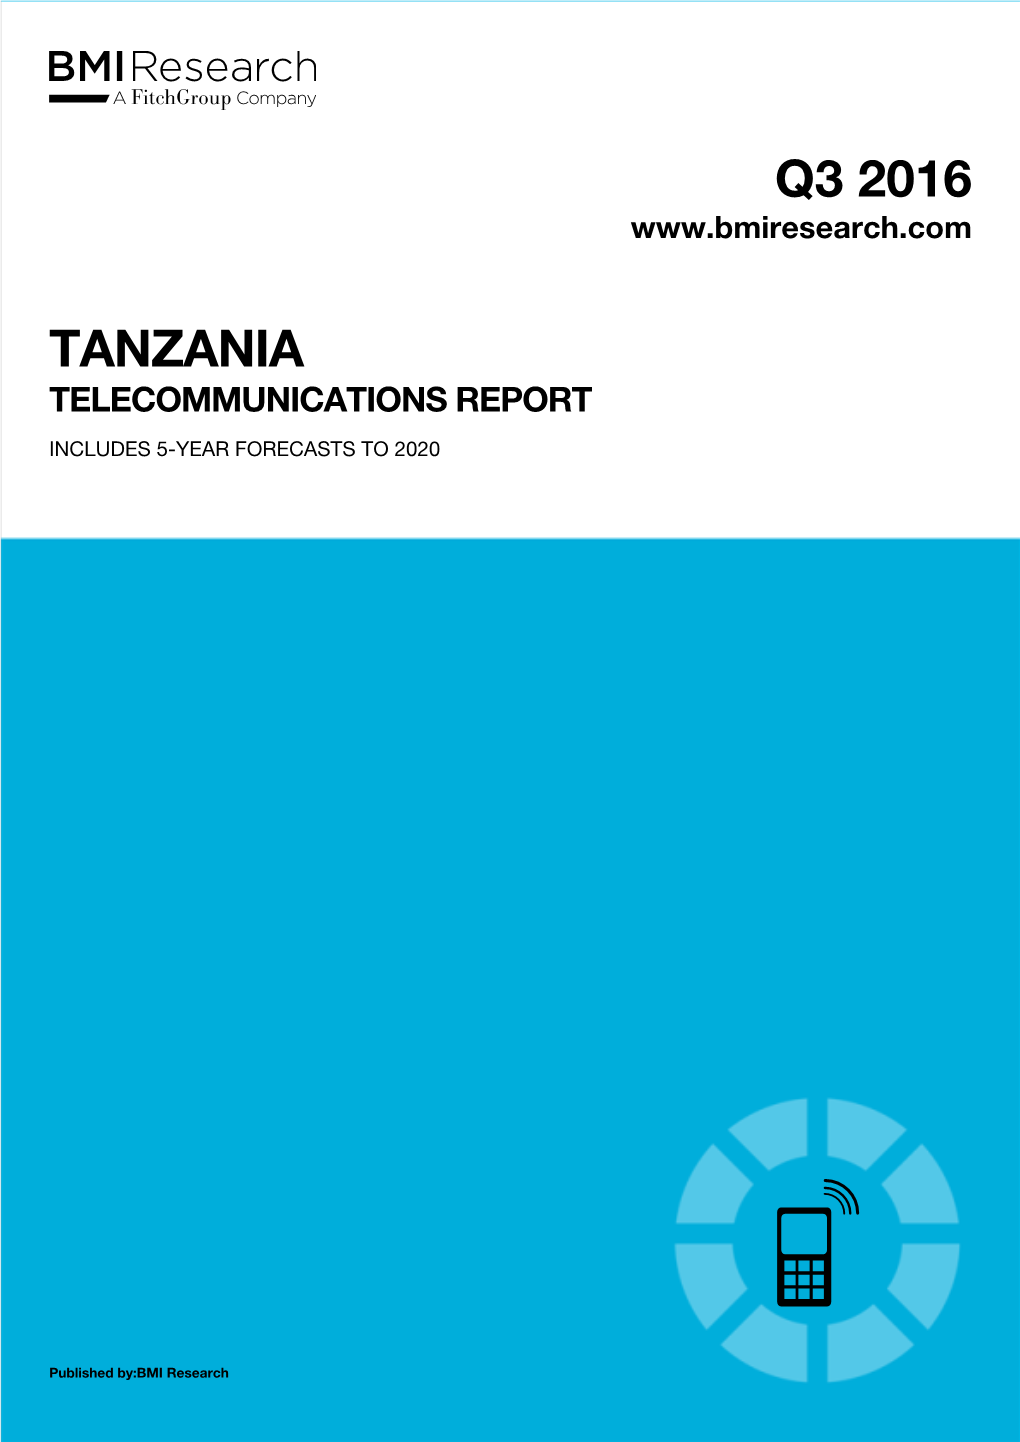 Q3 2016 Tanzania